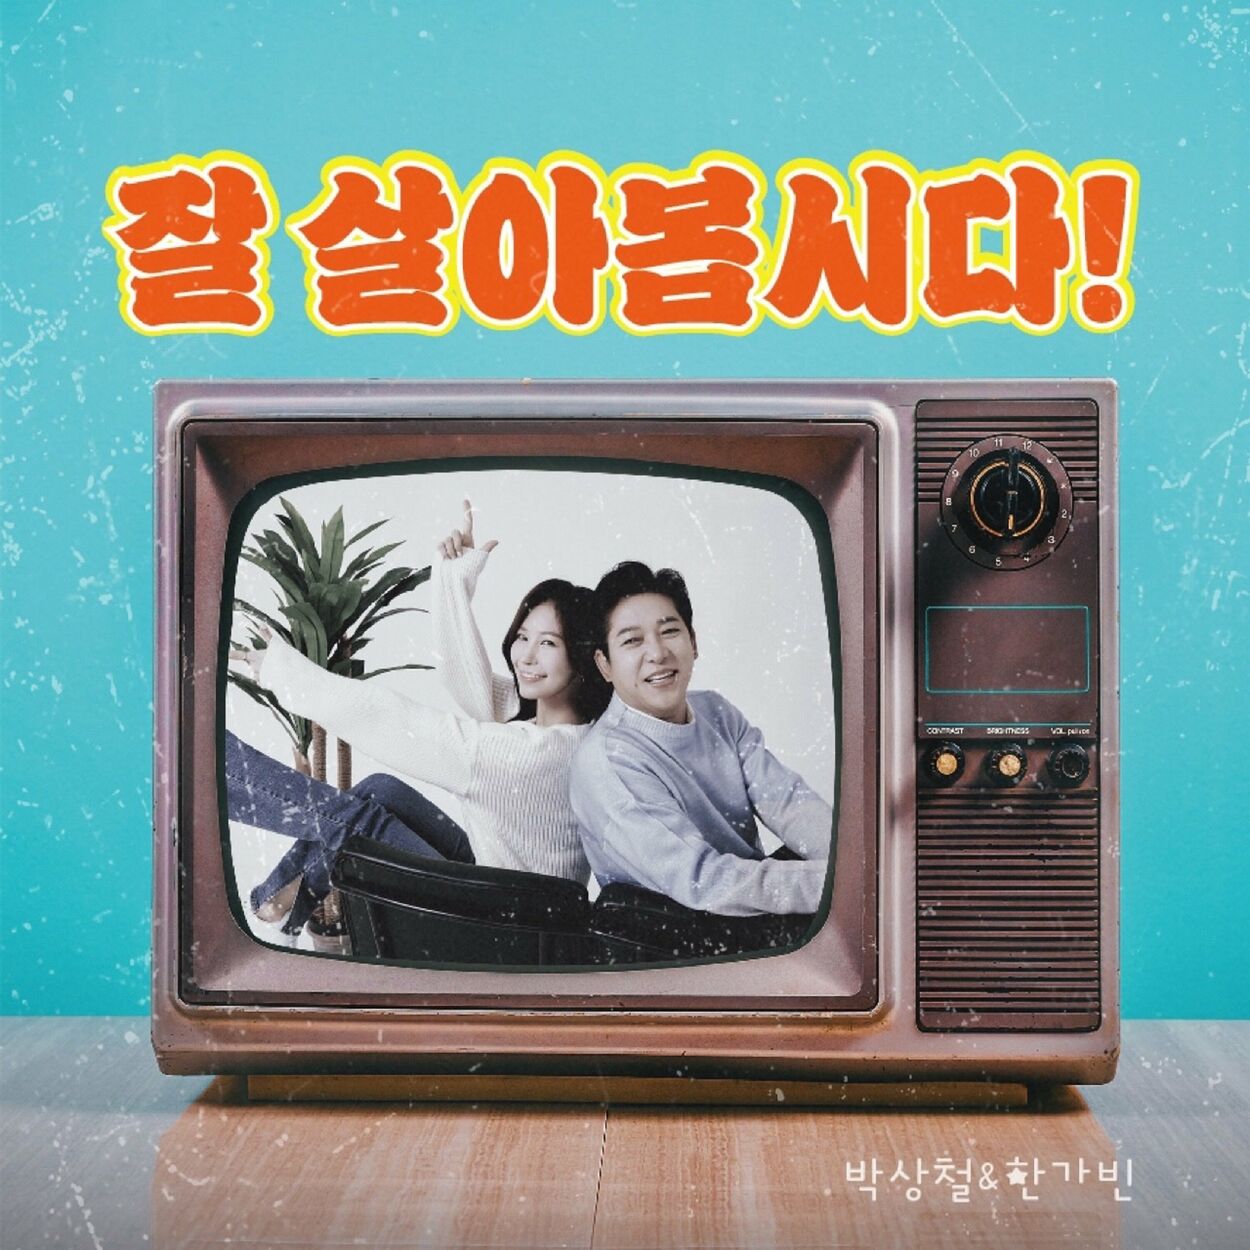 Park Sangchul, Han Ga Bin – Let’s live well – Single